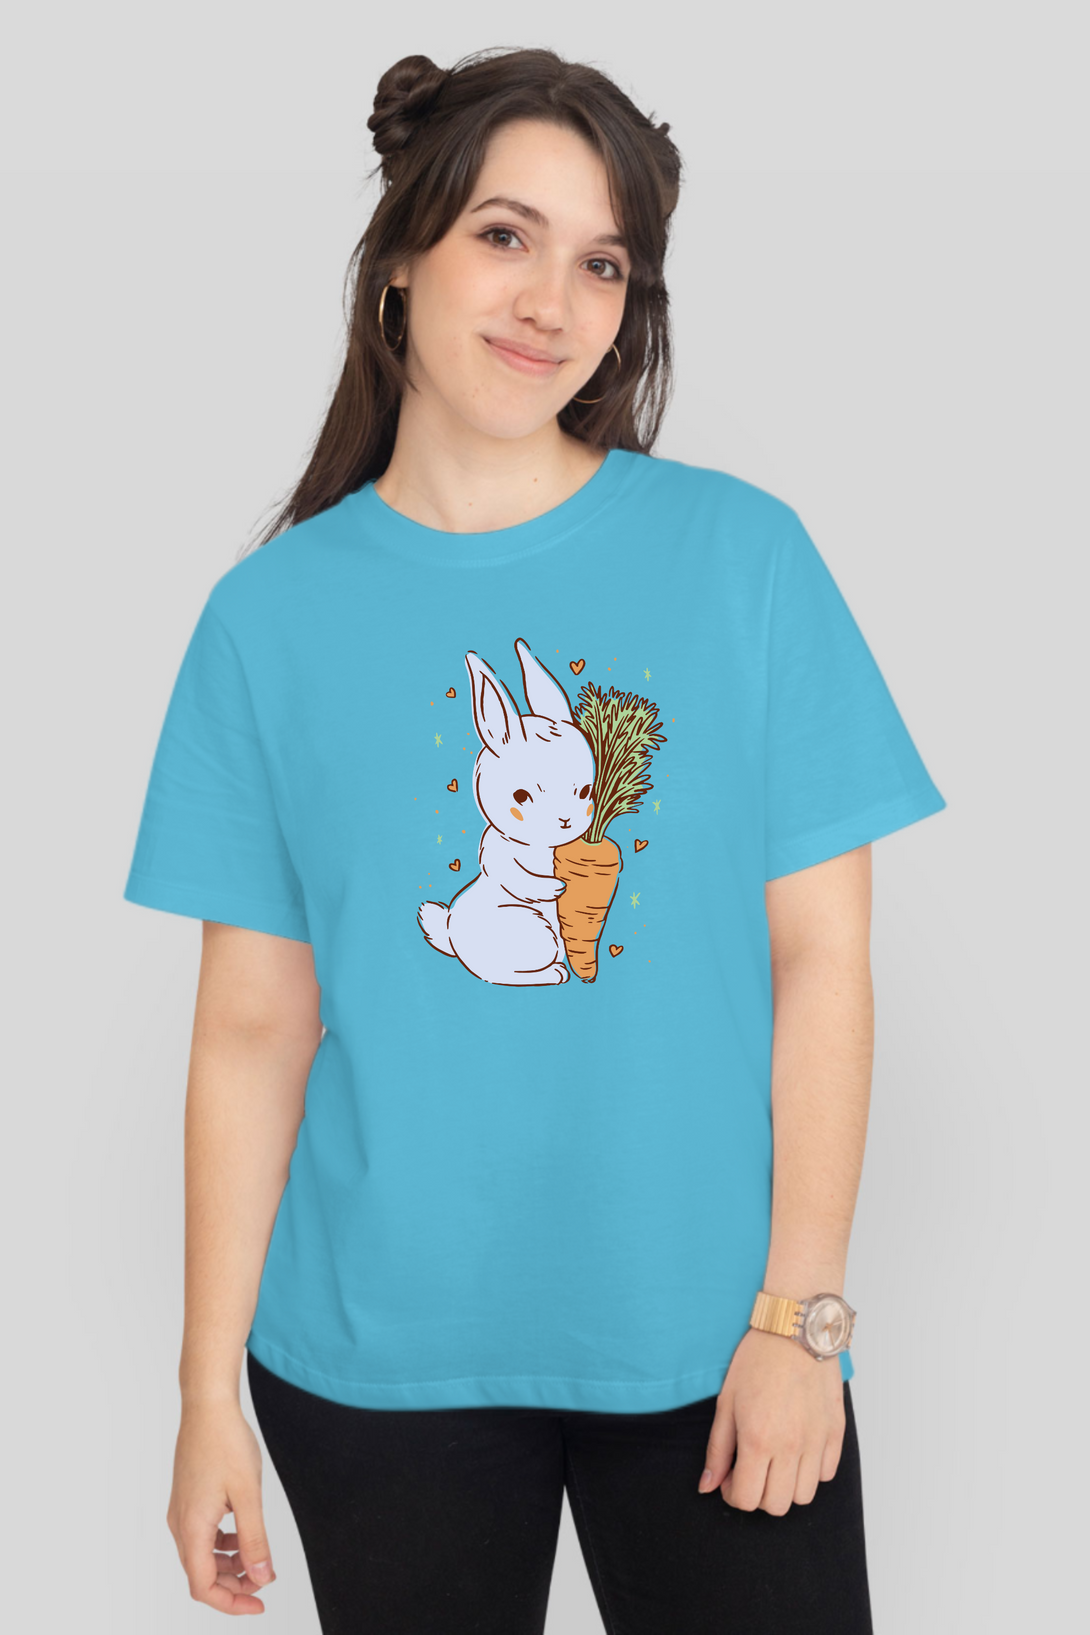 Bunny Love Printed T-Shirt For Women - WowWaves - 9